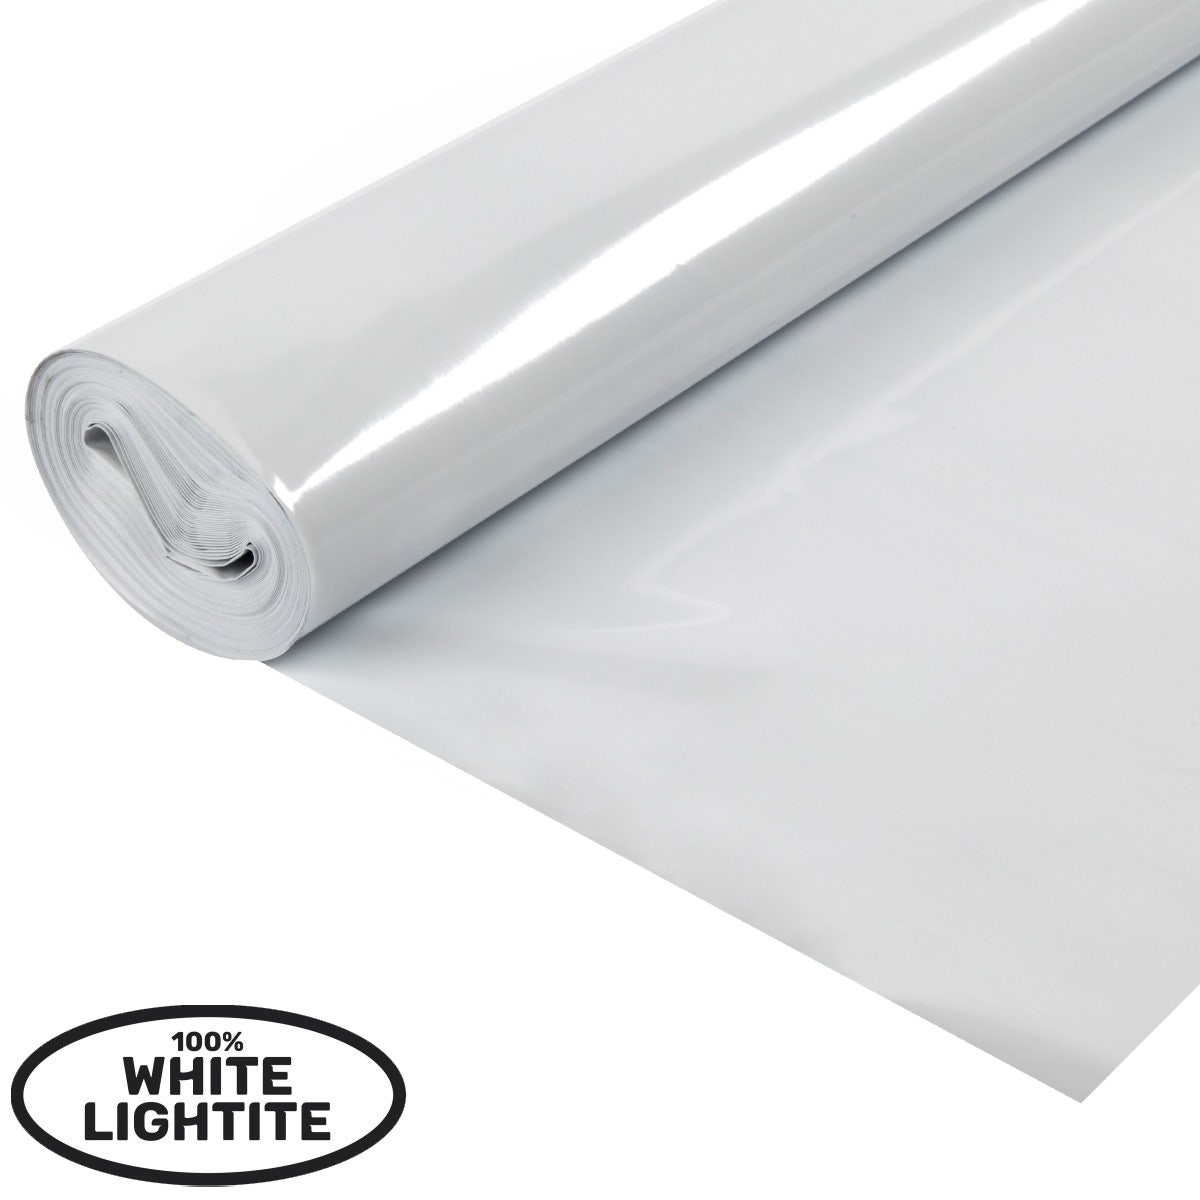 2m White Lightite (WBW) 120mu Lightproof Sheeting